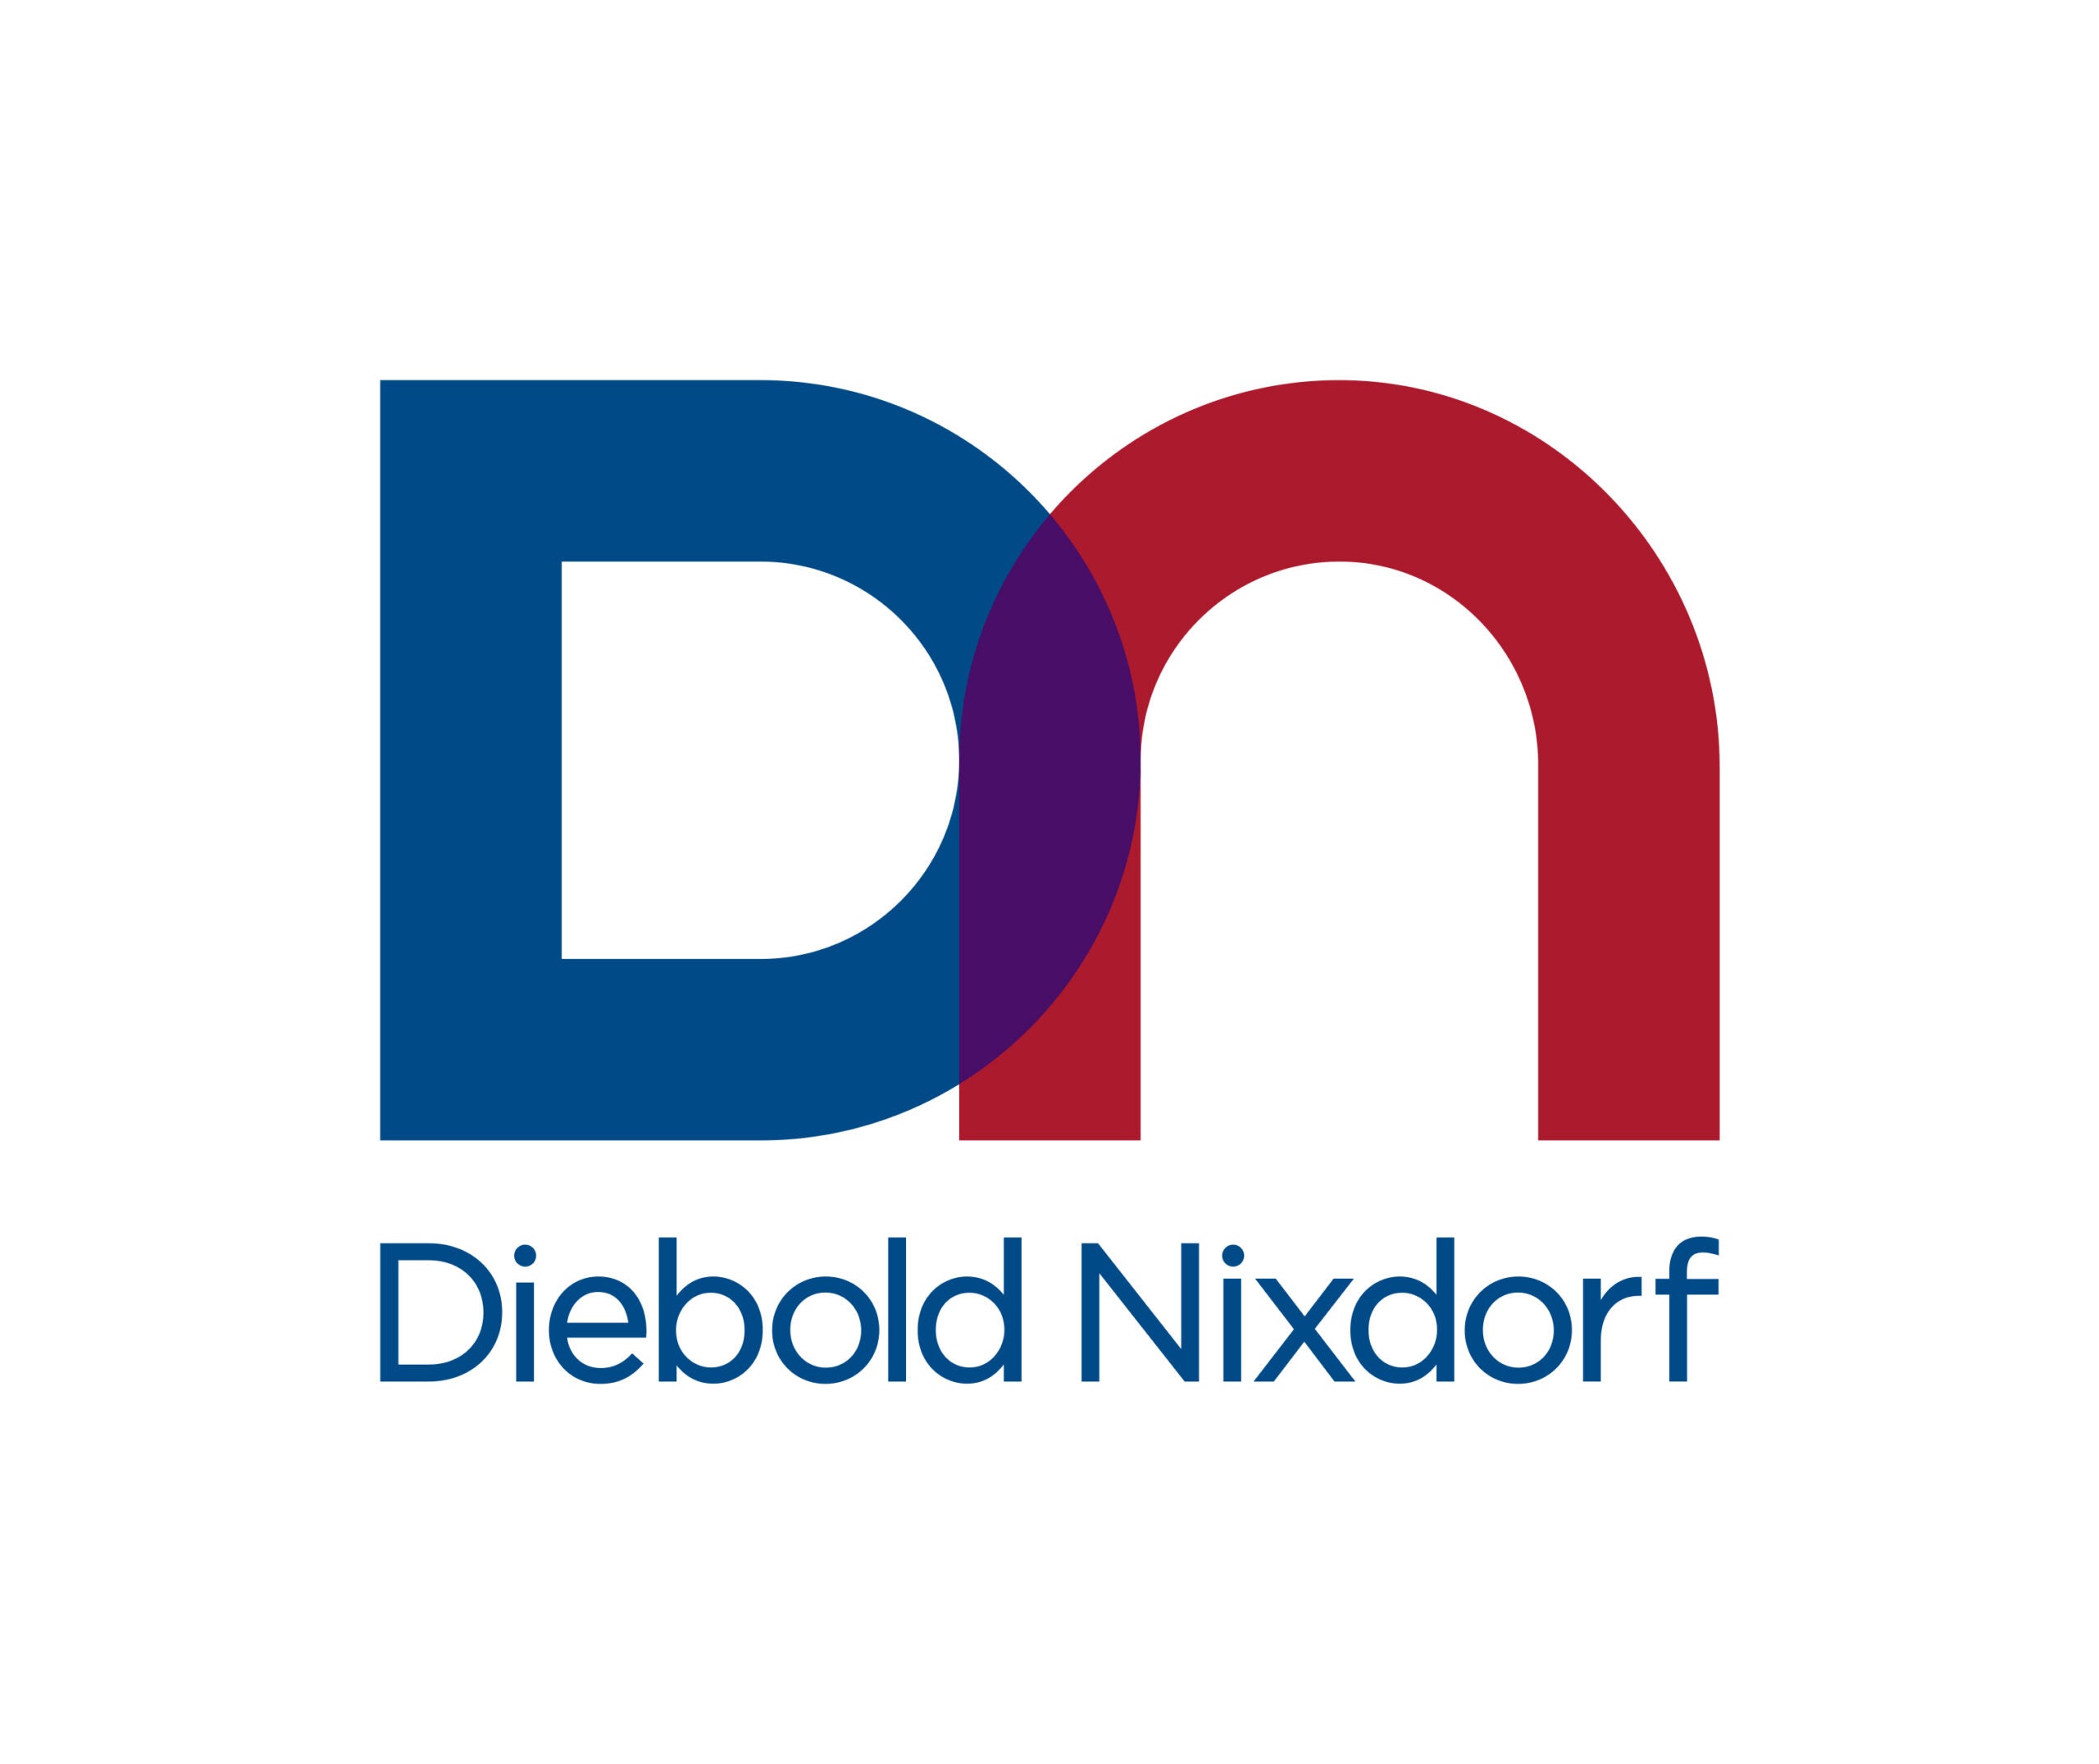 Diebold Nixdorf